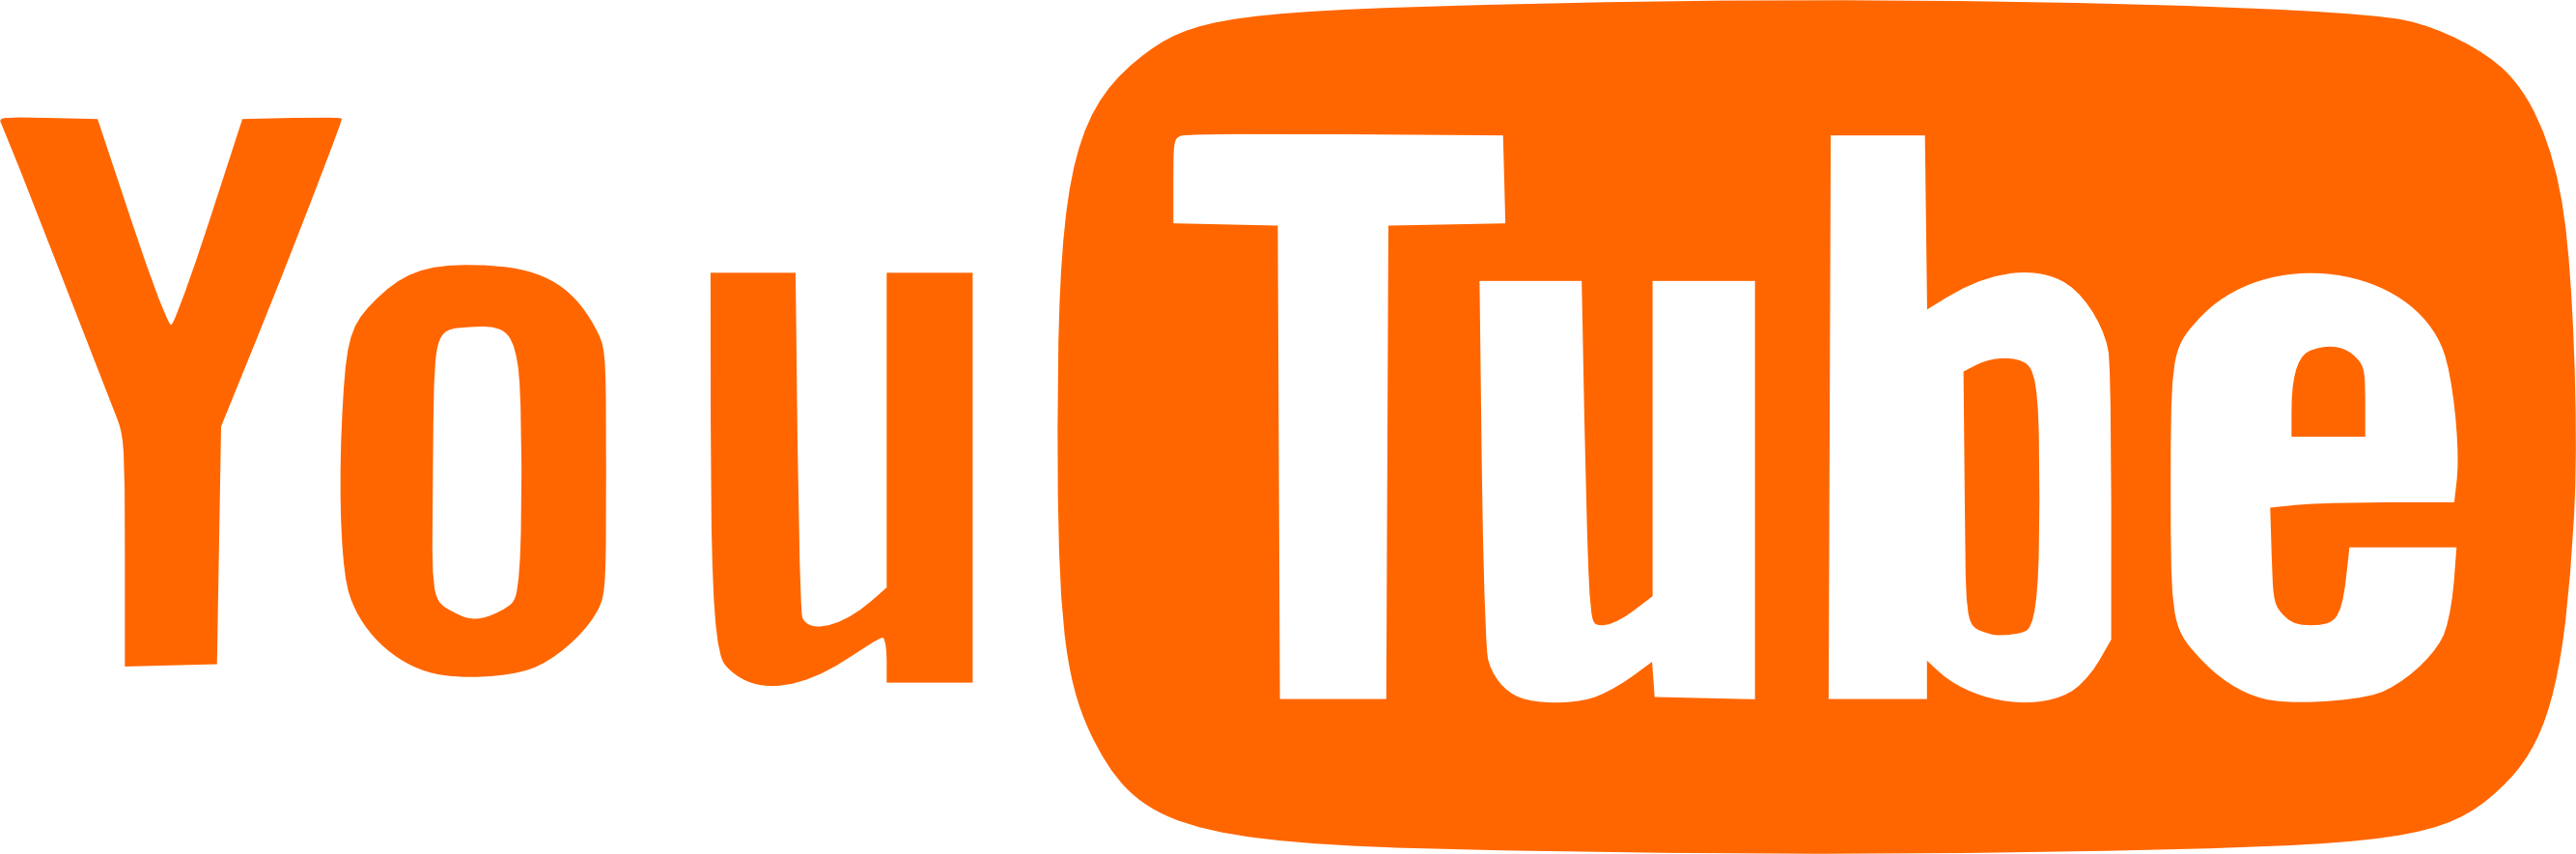 Orange And White Logo Of Youtube - White Youtube Logo Transparent (2668x884)